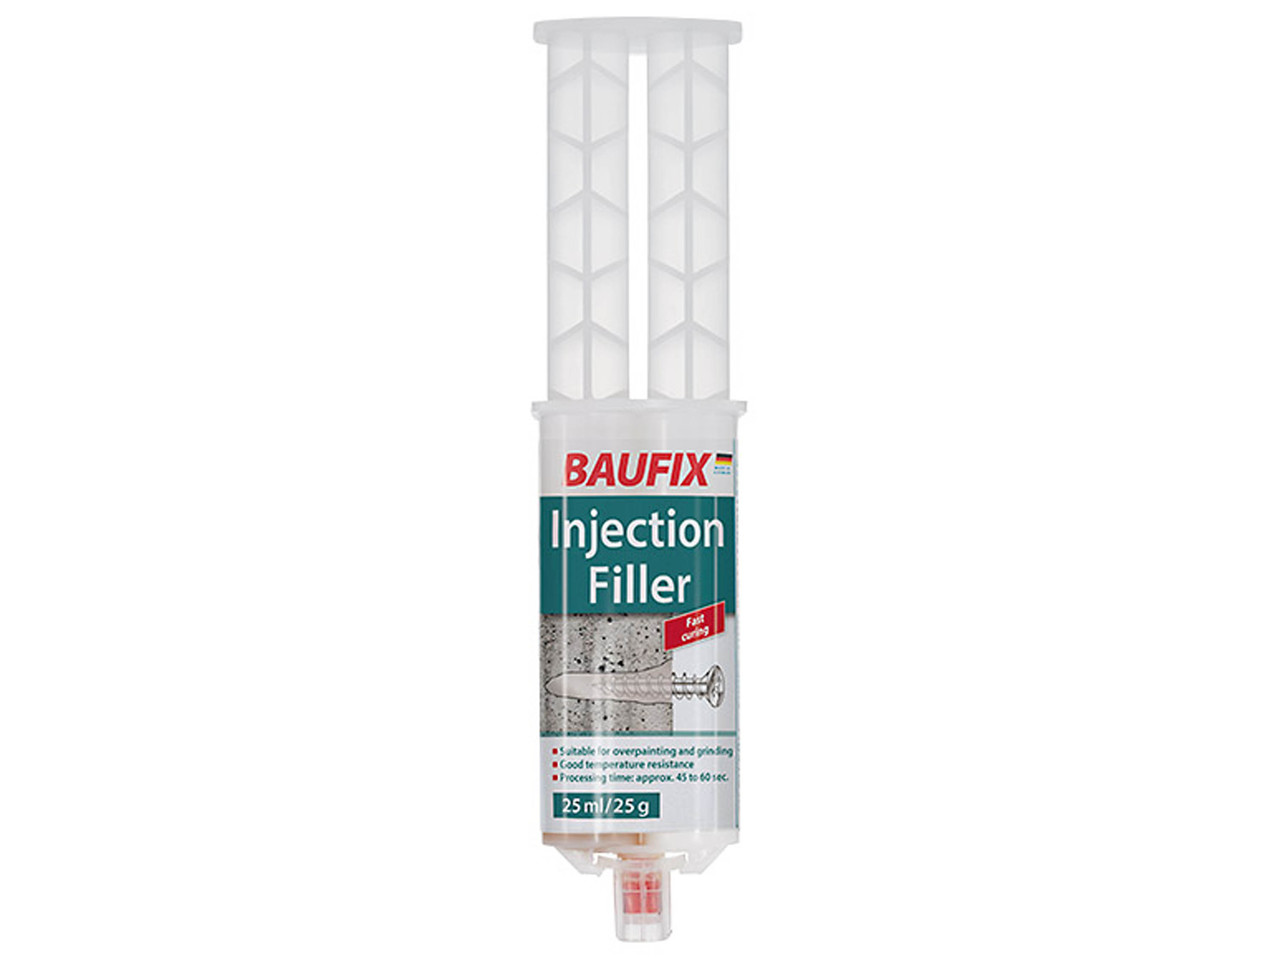 BAUFIX Injection Filler